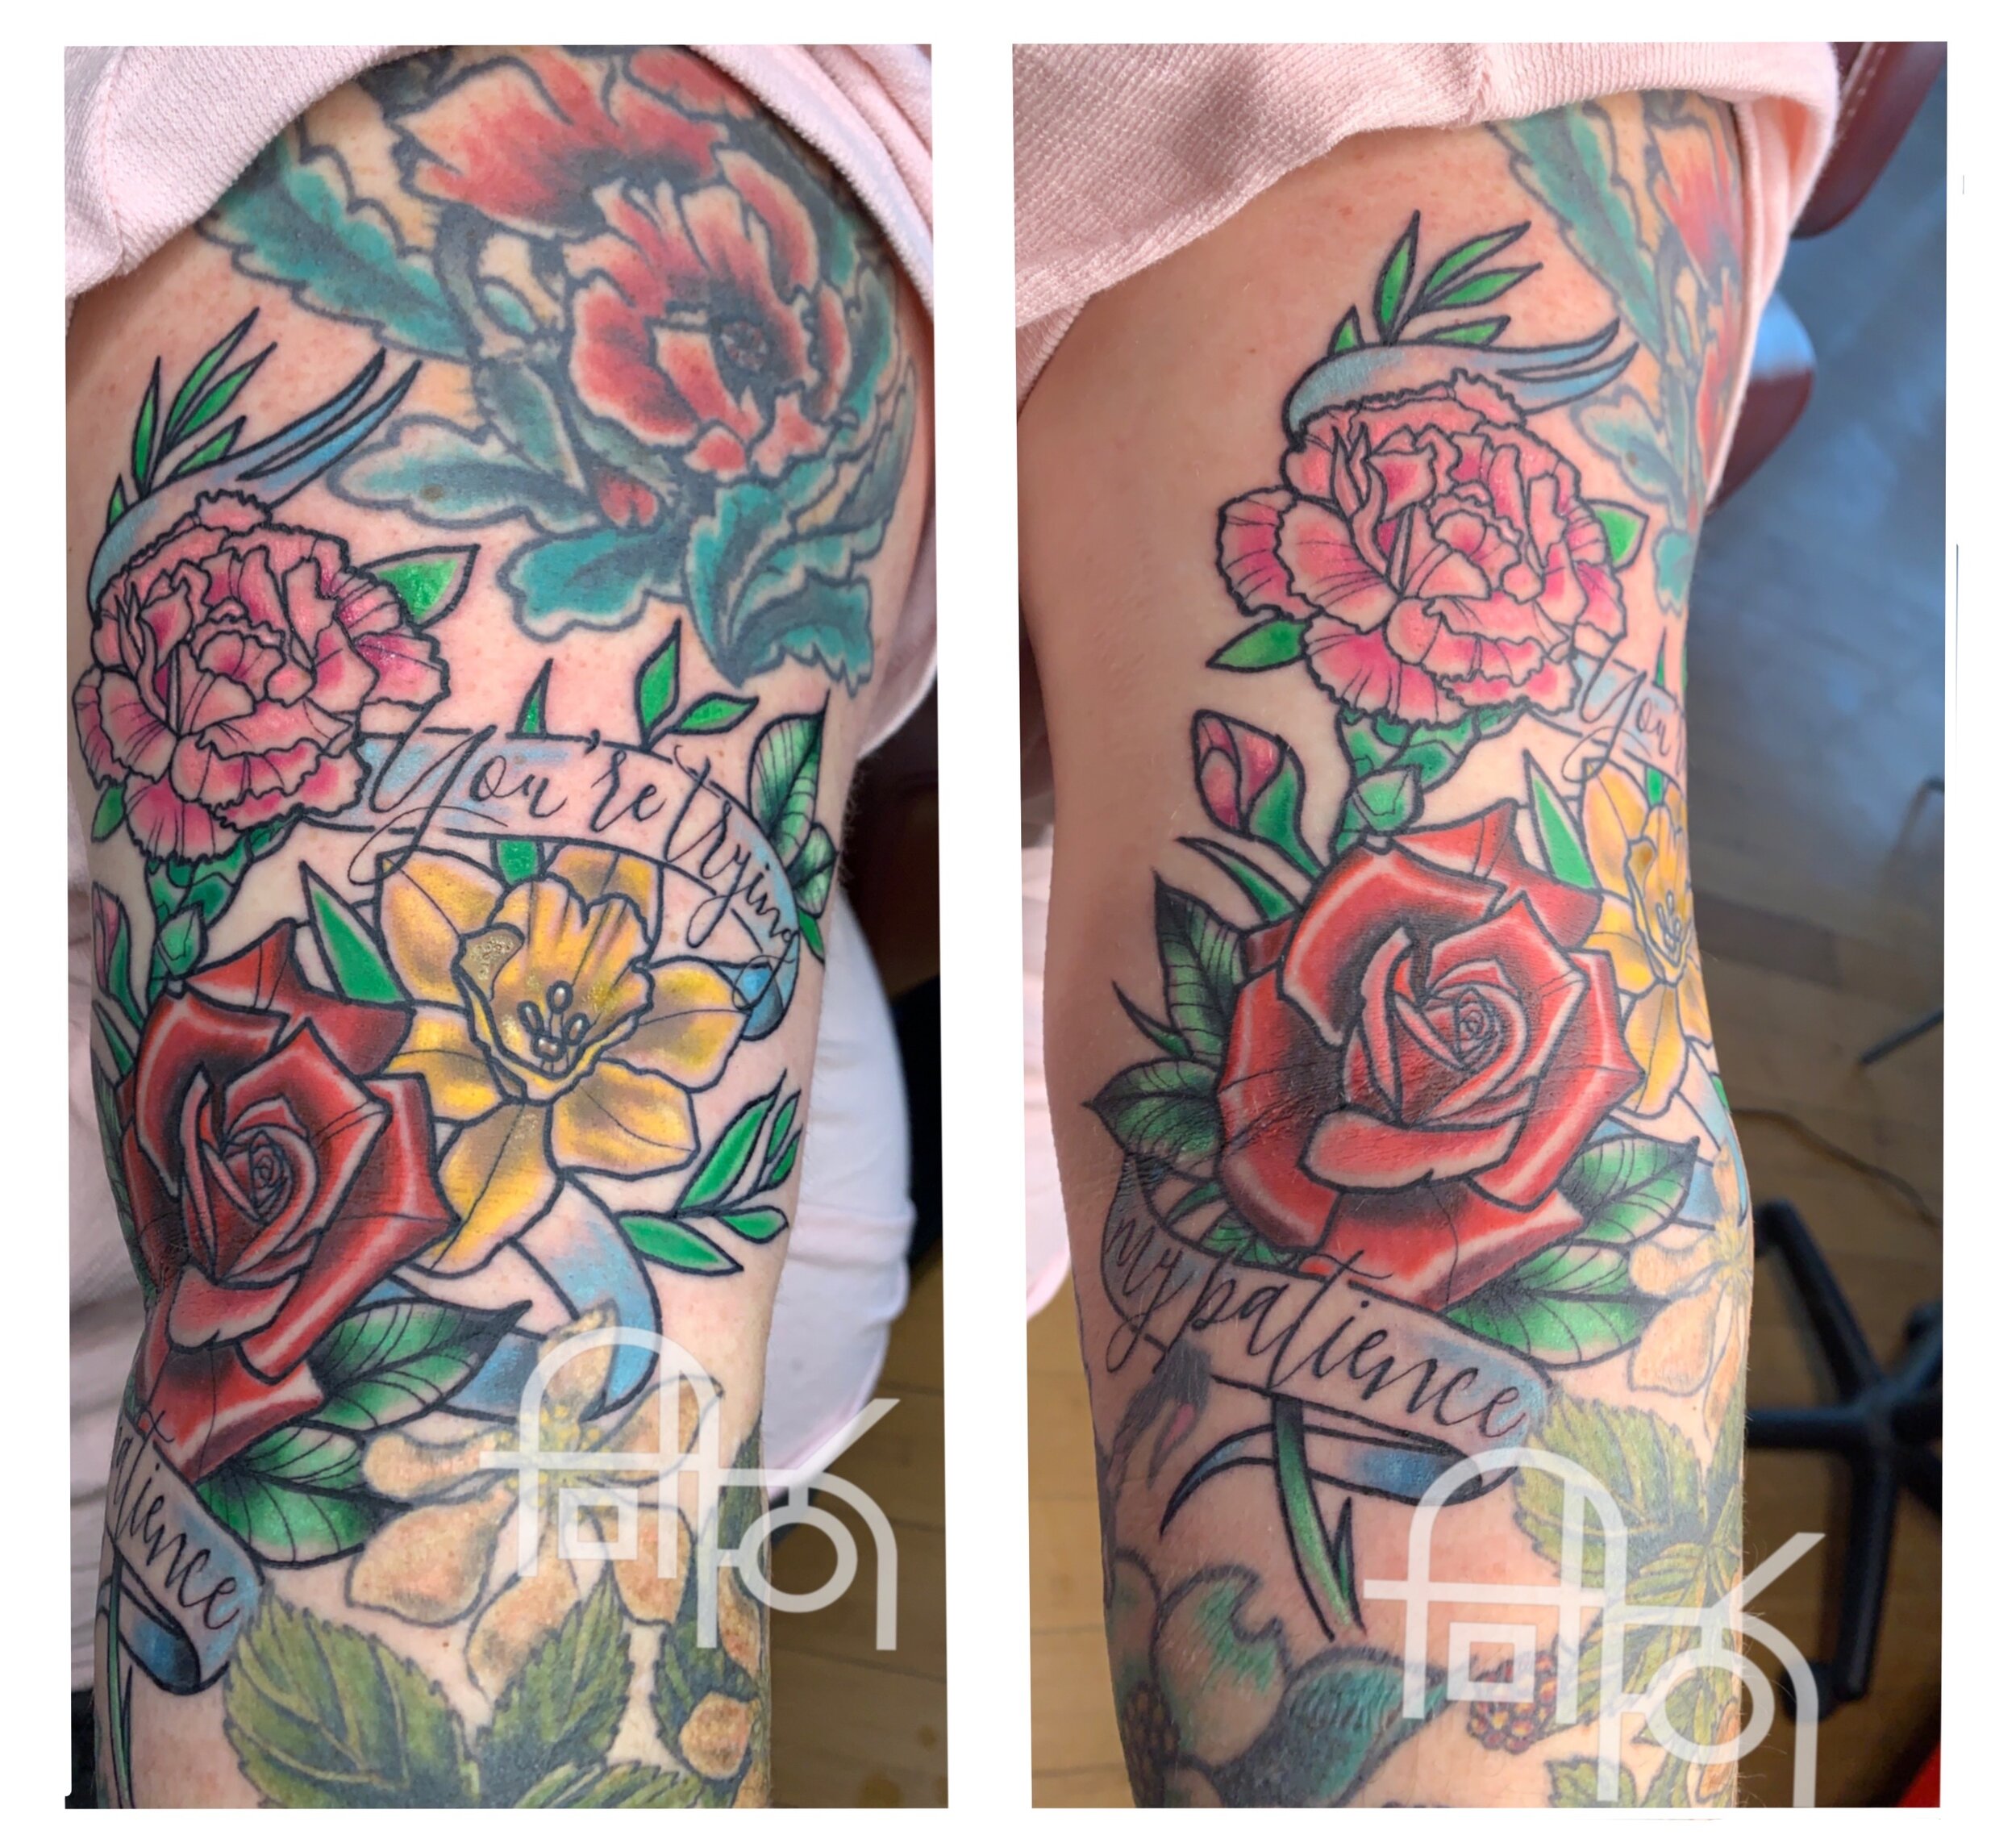 Wilco Lyrics-Inspired Floral Tattoo